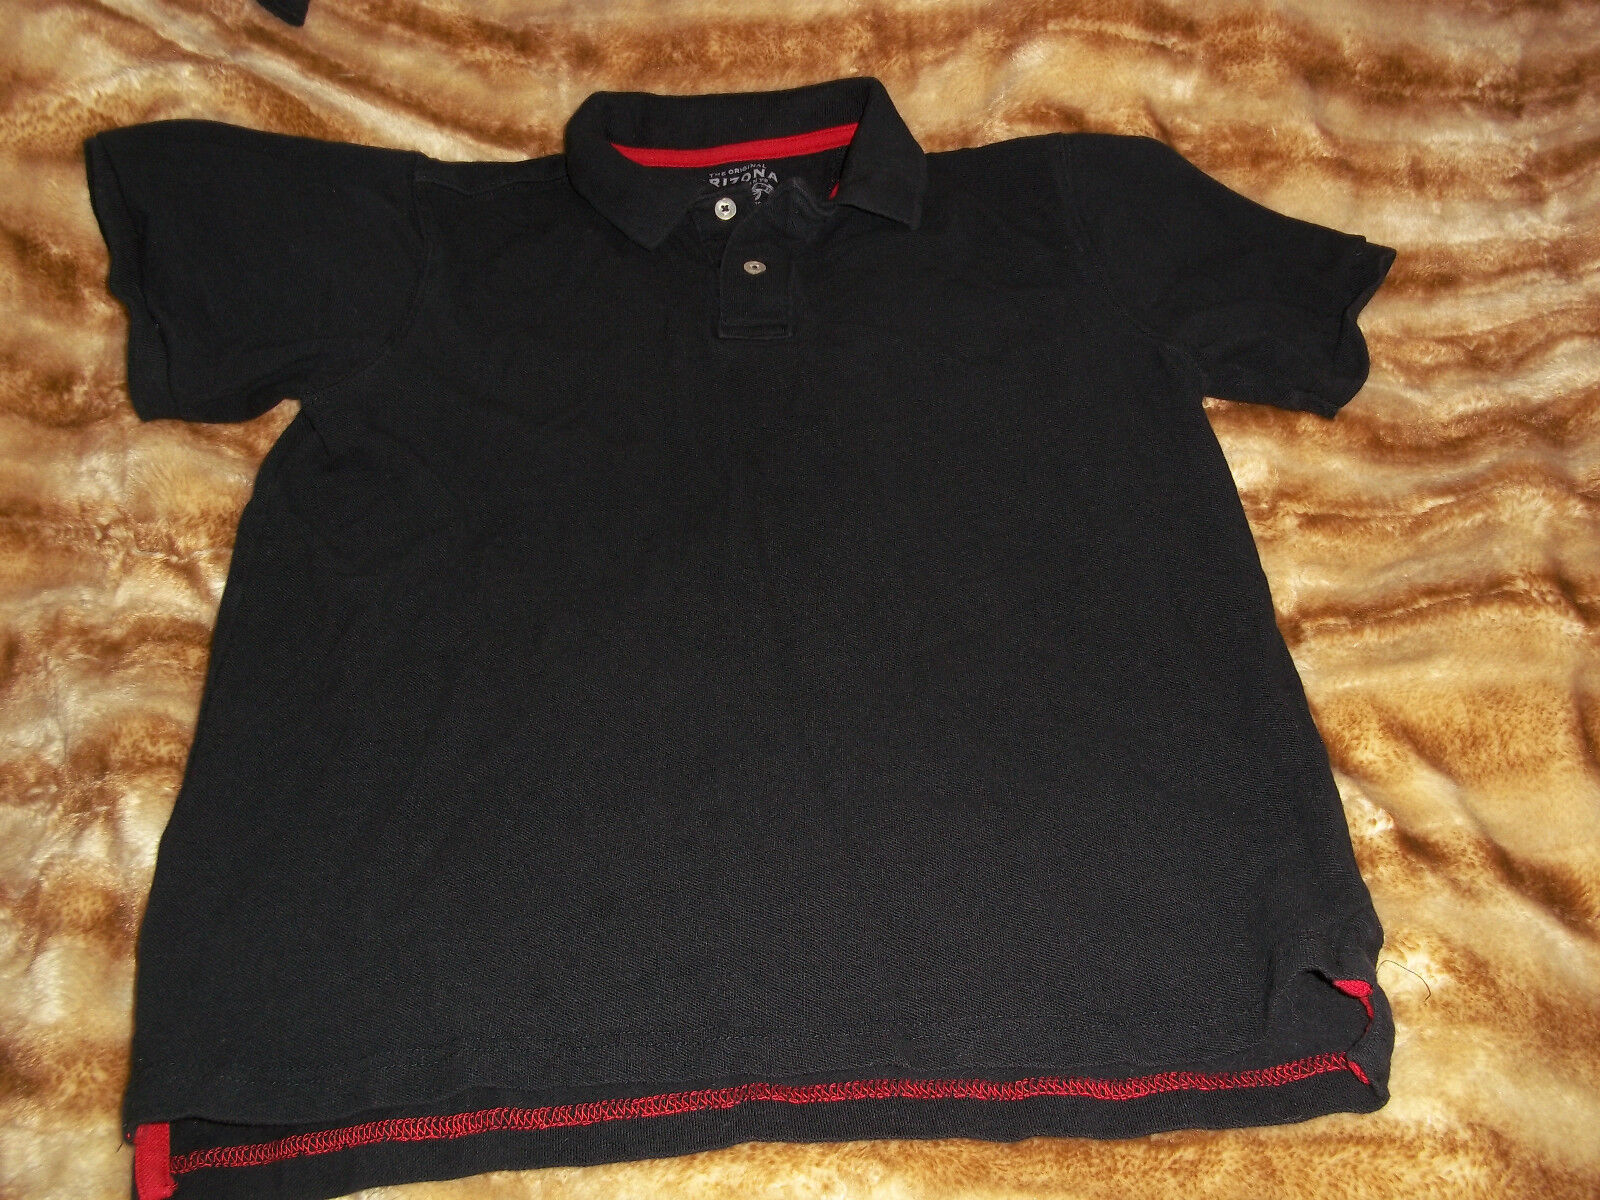 Boys Arizona Size Small Black Polo Shirt - $7.99